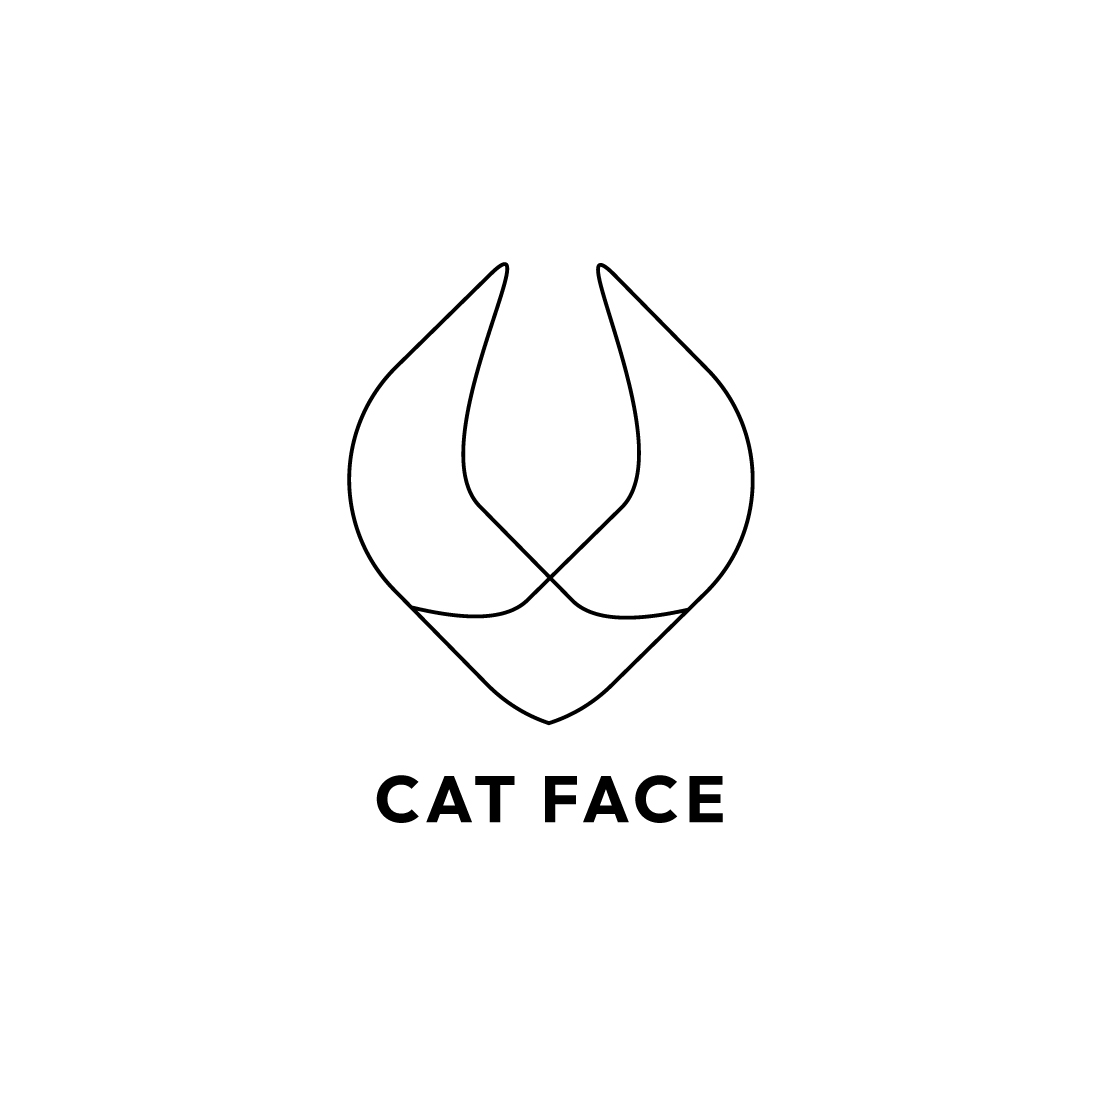 Elegant Line Art Cat Face Logo Design Kit: Perfect for Branding and Marketing! preview image.